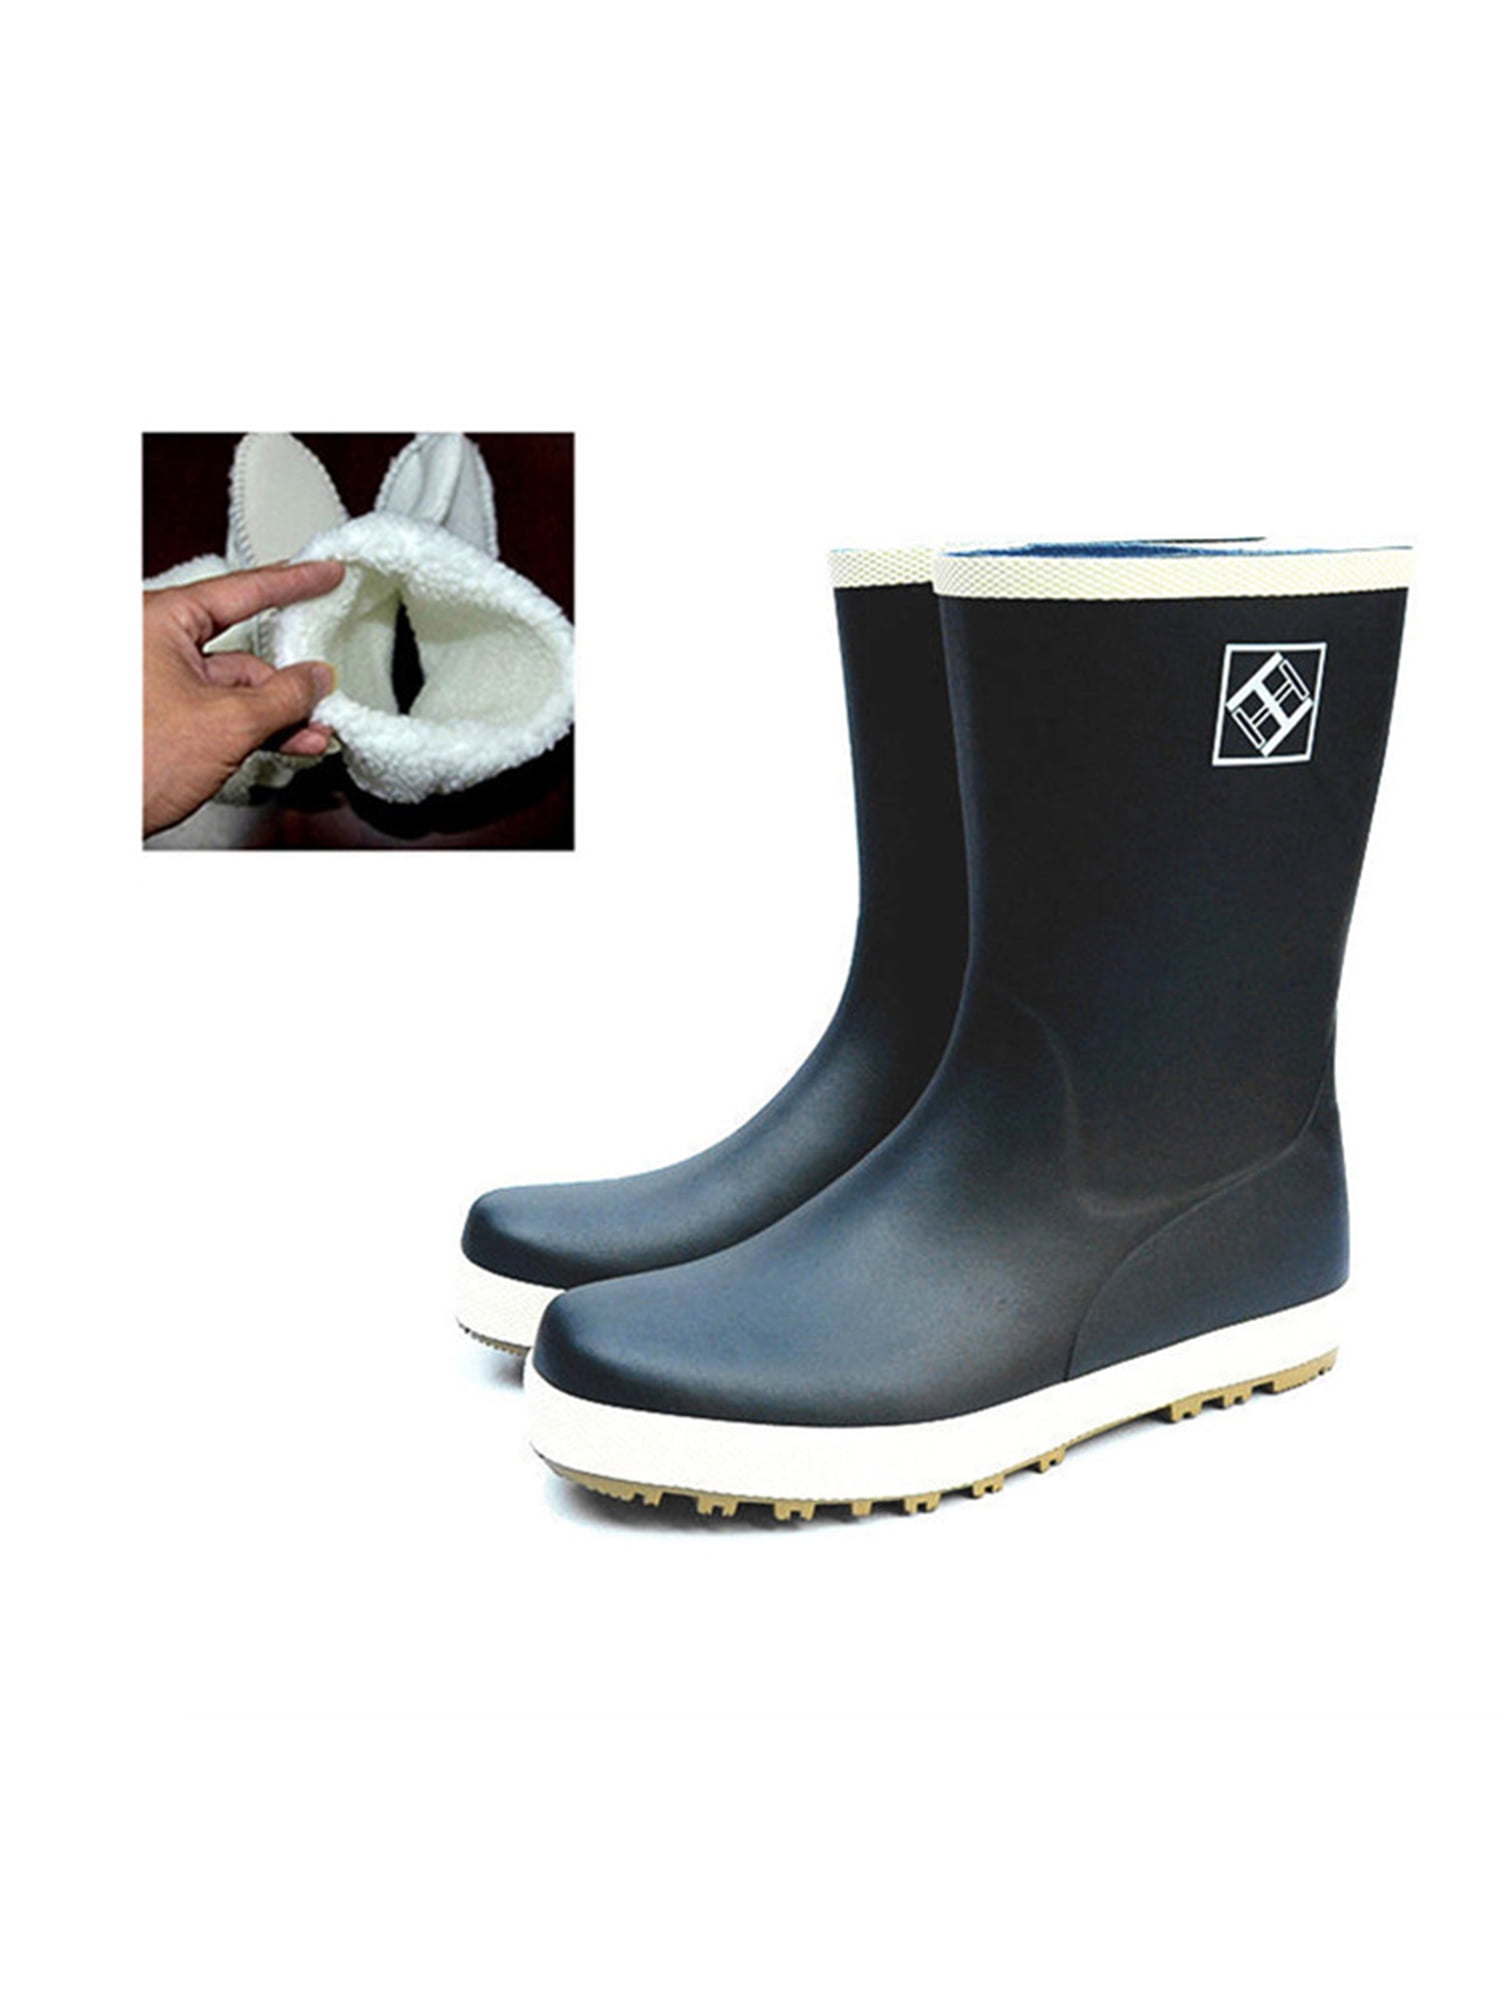 Gomelly Unisex Rain Boots Slip Resistant Rubber Wide Calf Work Shoe Breathable Rainboot Women Men Womens Mens Garden Shoes Black With White Plush Socks 8.5 - Walmart.com